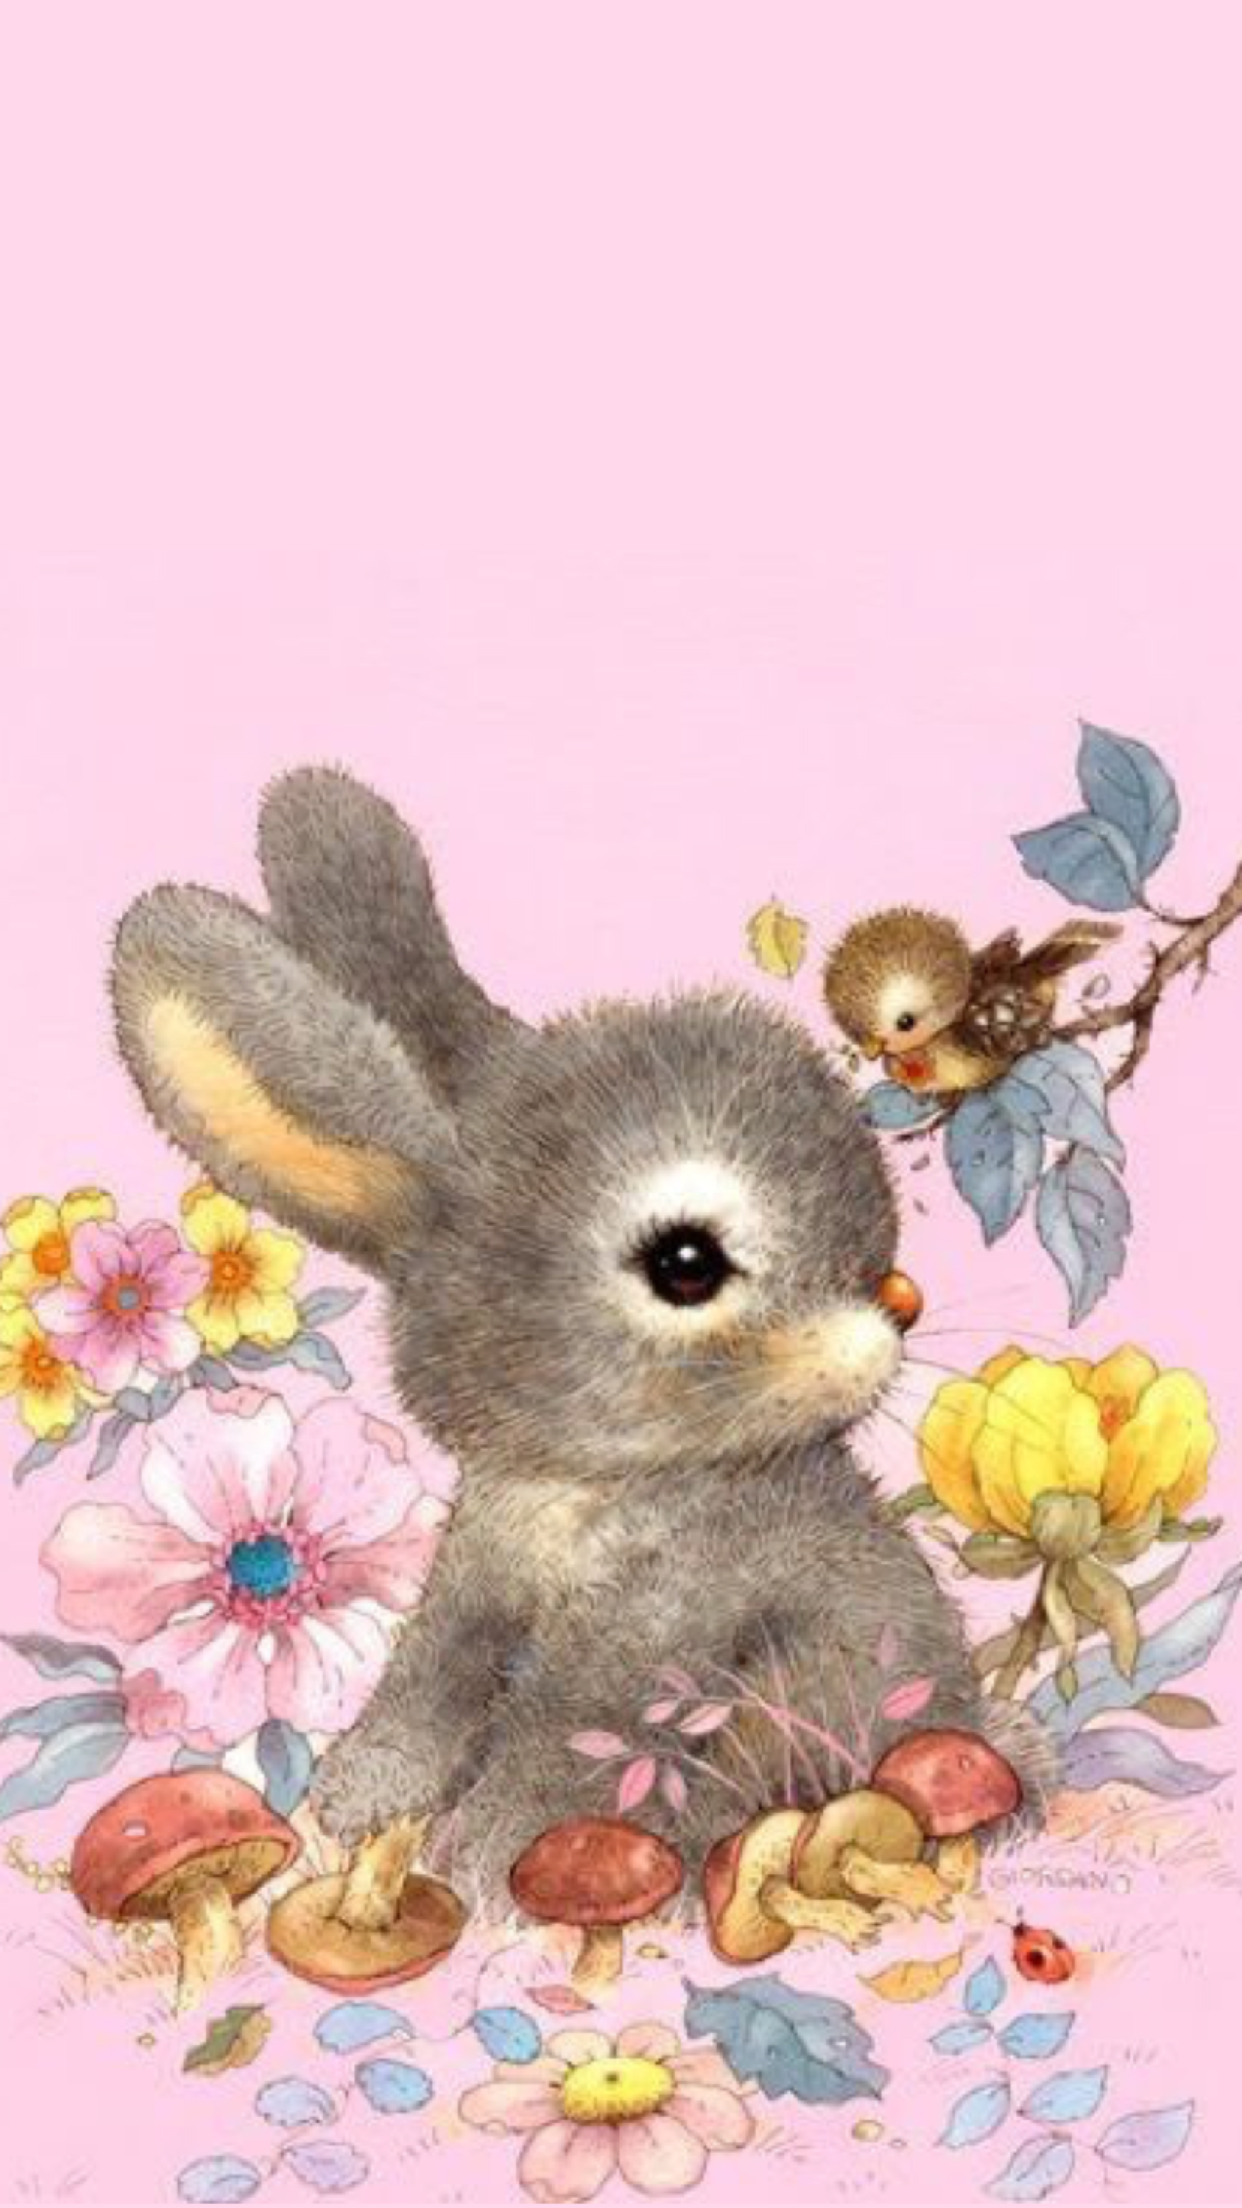 Wallpaper. Easter wallpaper, Bunny wallpaper, Baby animal drawings